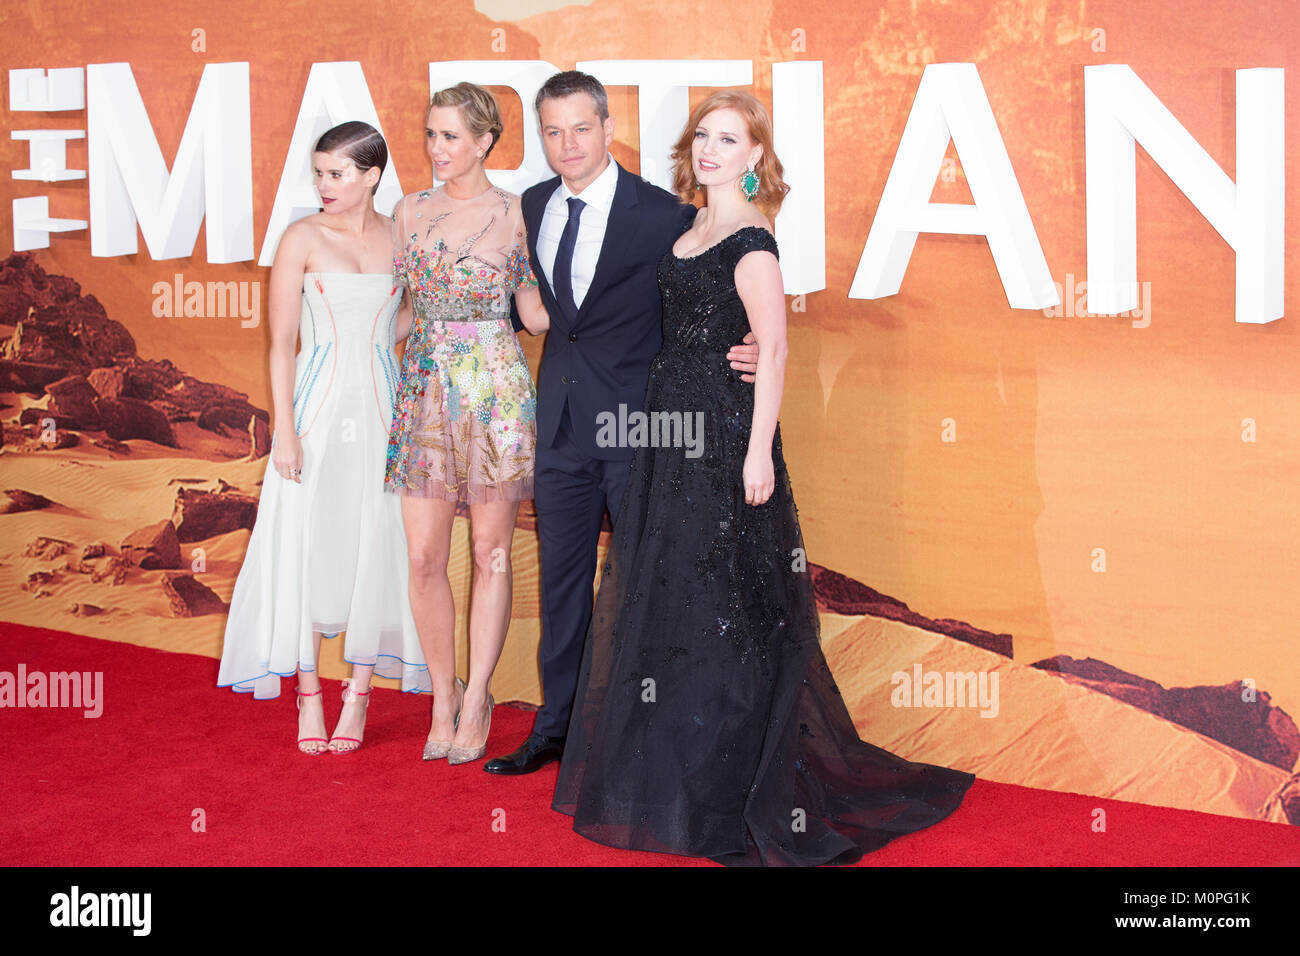 London, UK,  24 September 2015,Jessica Chastain,Kristen Wiig,Kate Mara,Matt Damon, European Premiere of 'The Martian'. Mariusz Goslicki/Alamy Stock Photo